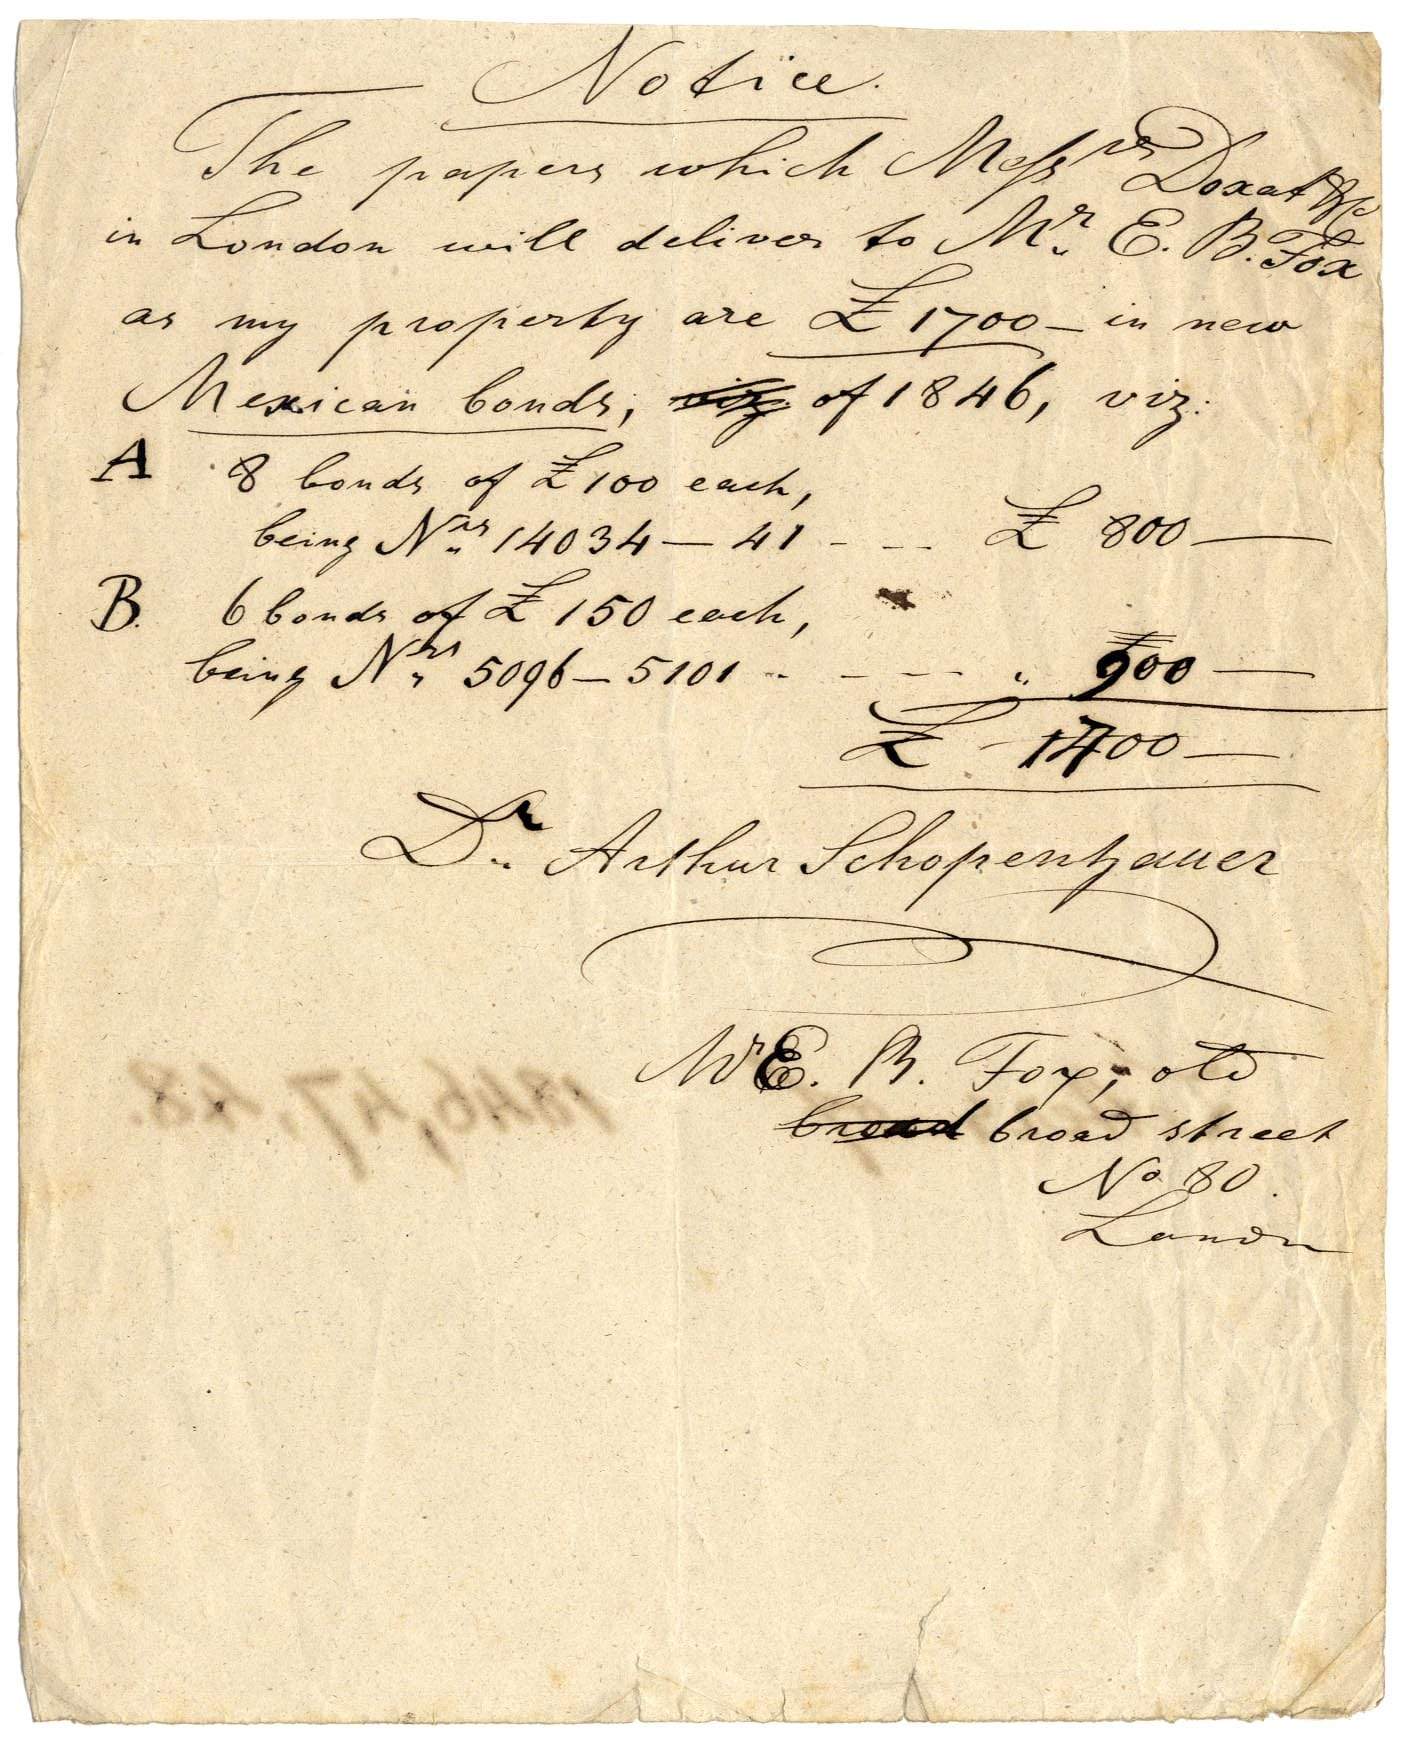 Arthur Schopenhauer Autograph Autogramm | ID 7200155238549